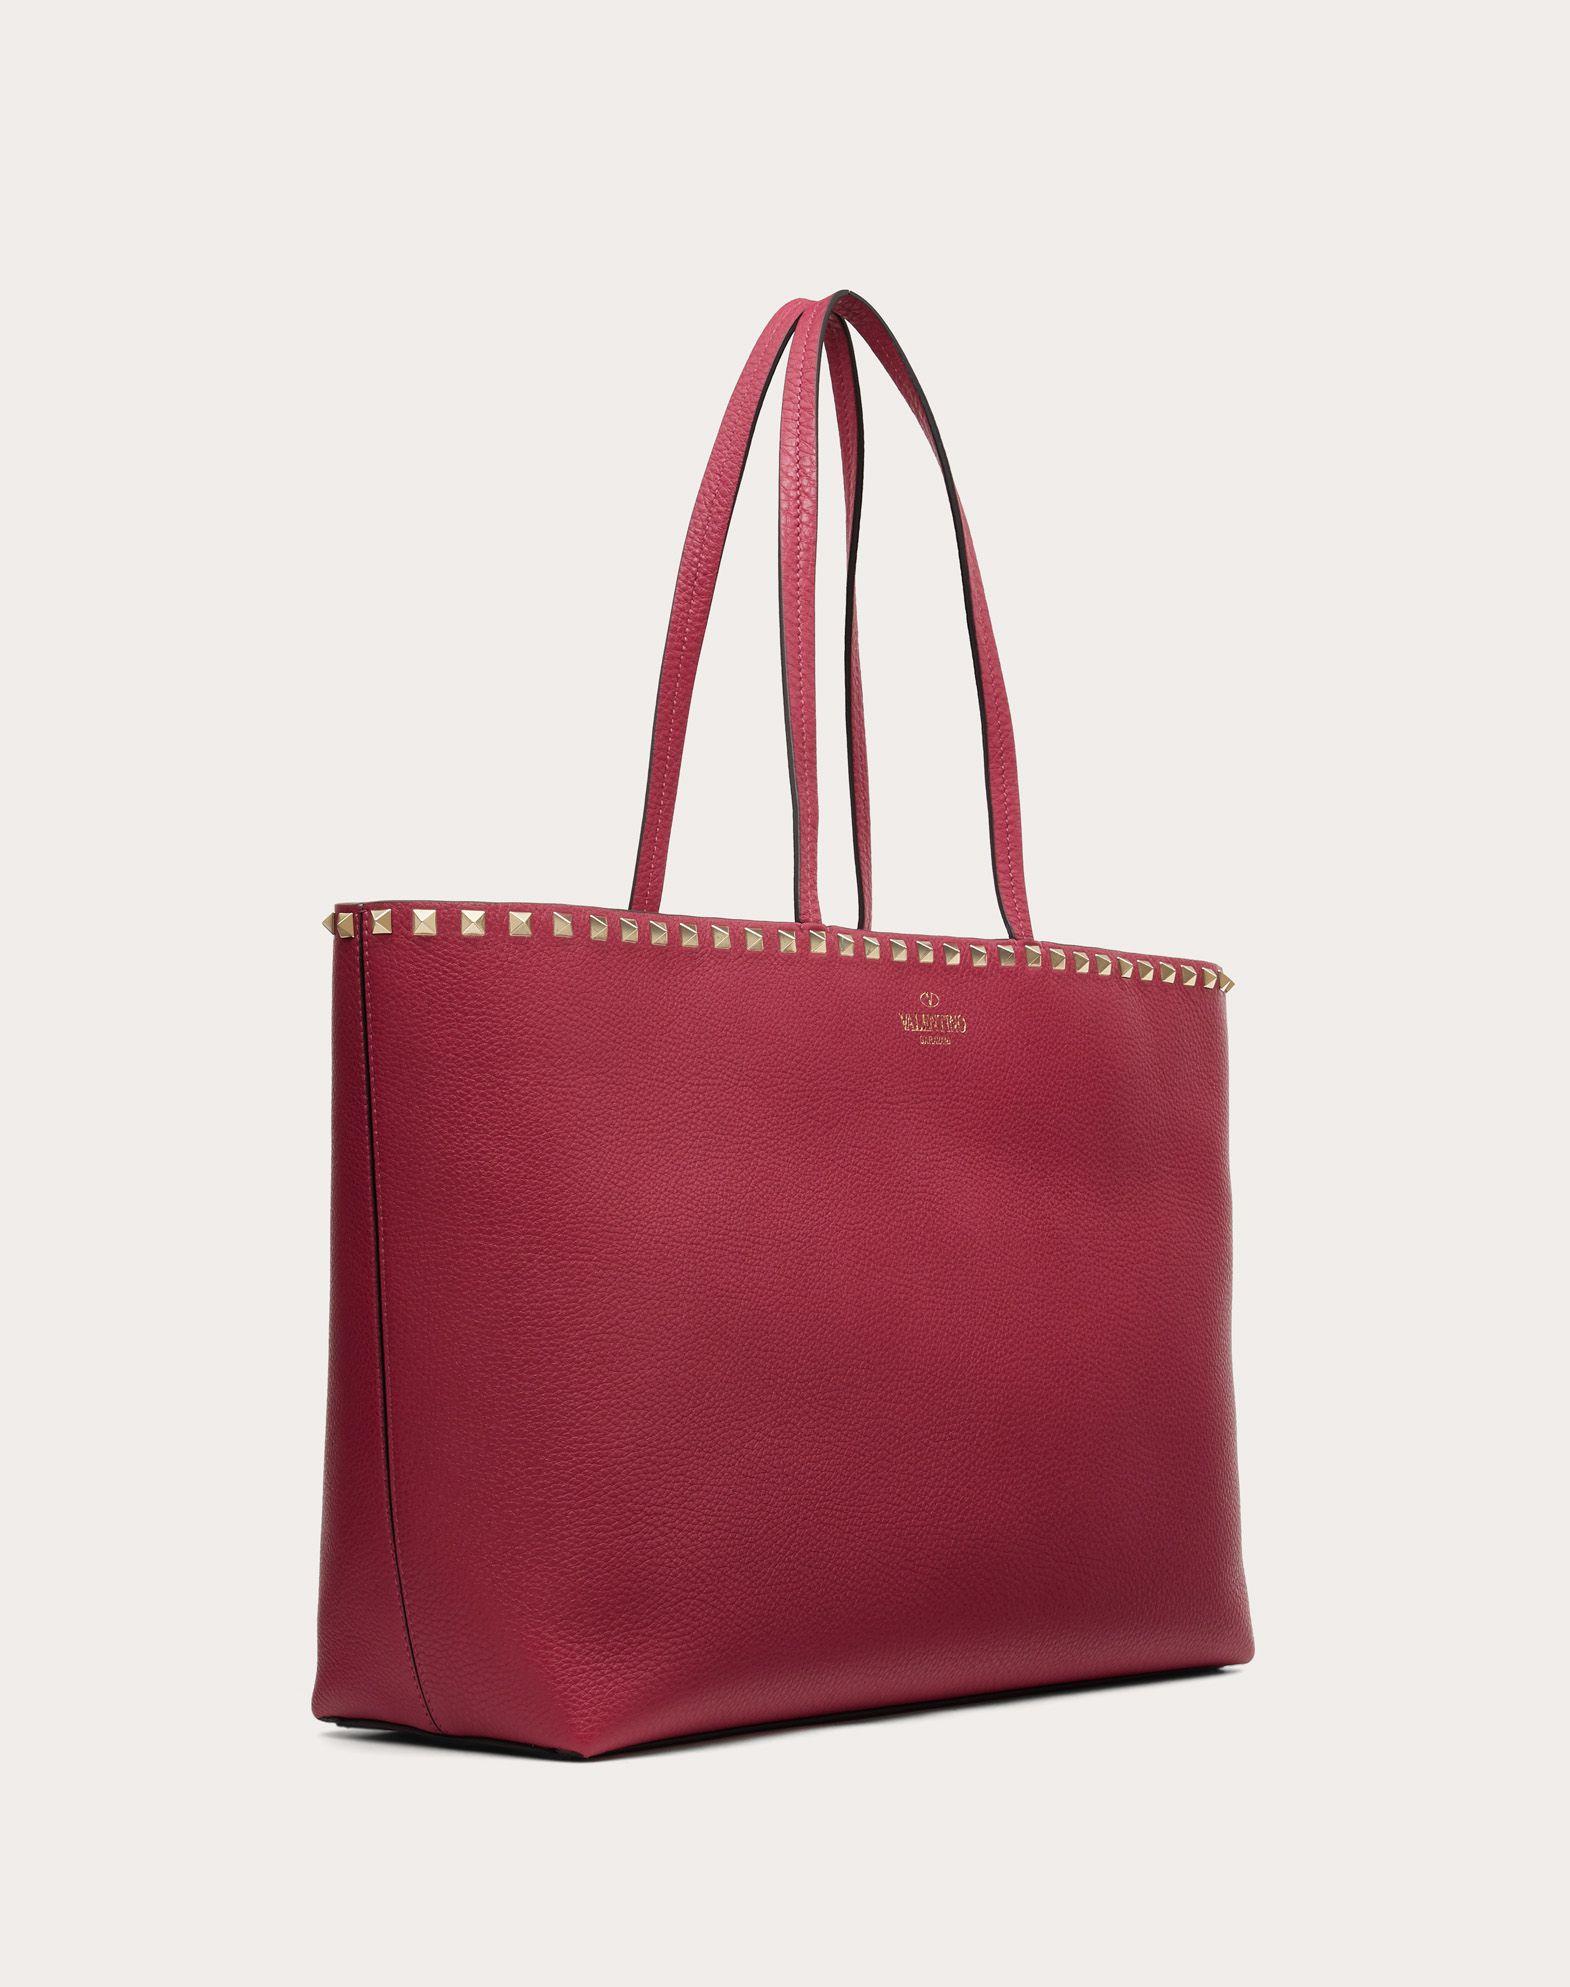 Valentino Leather Rockstud Grainy Calfskin Tote Bag in Raspberry 